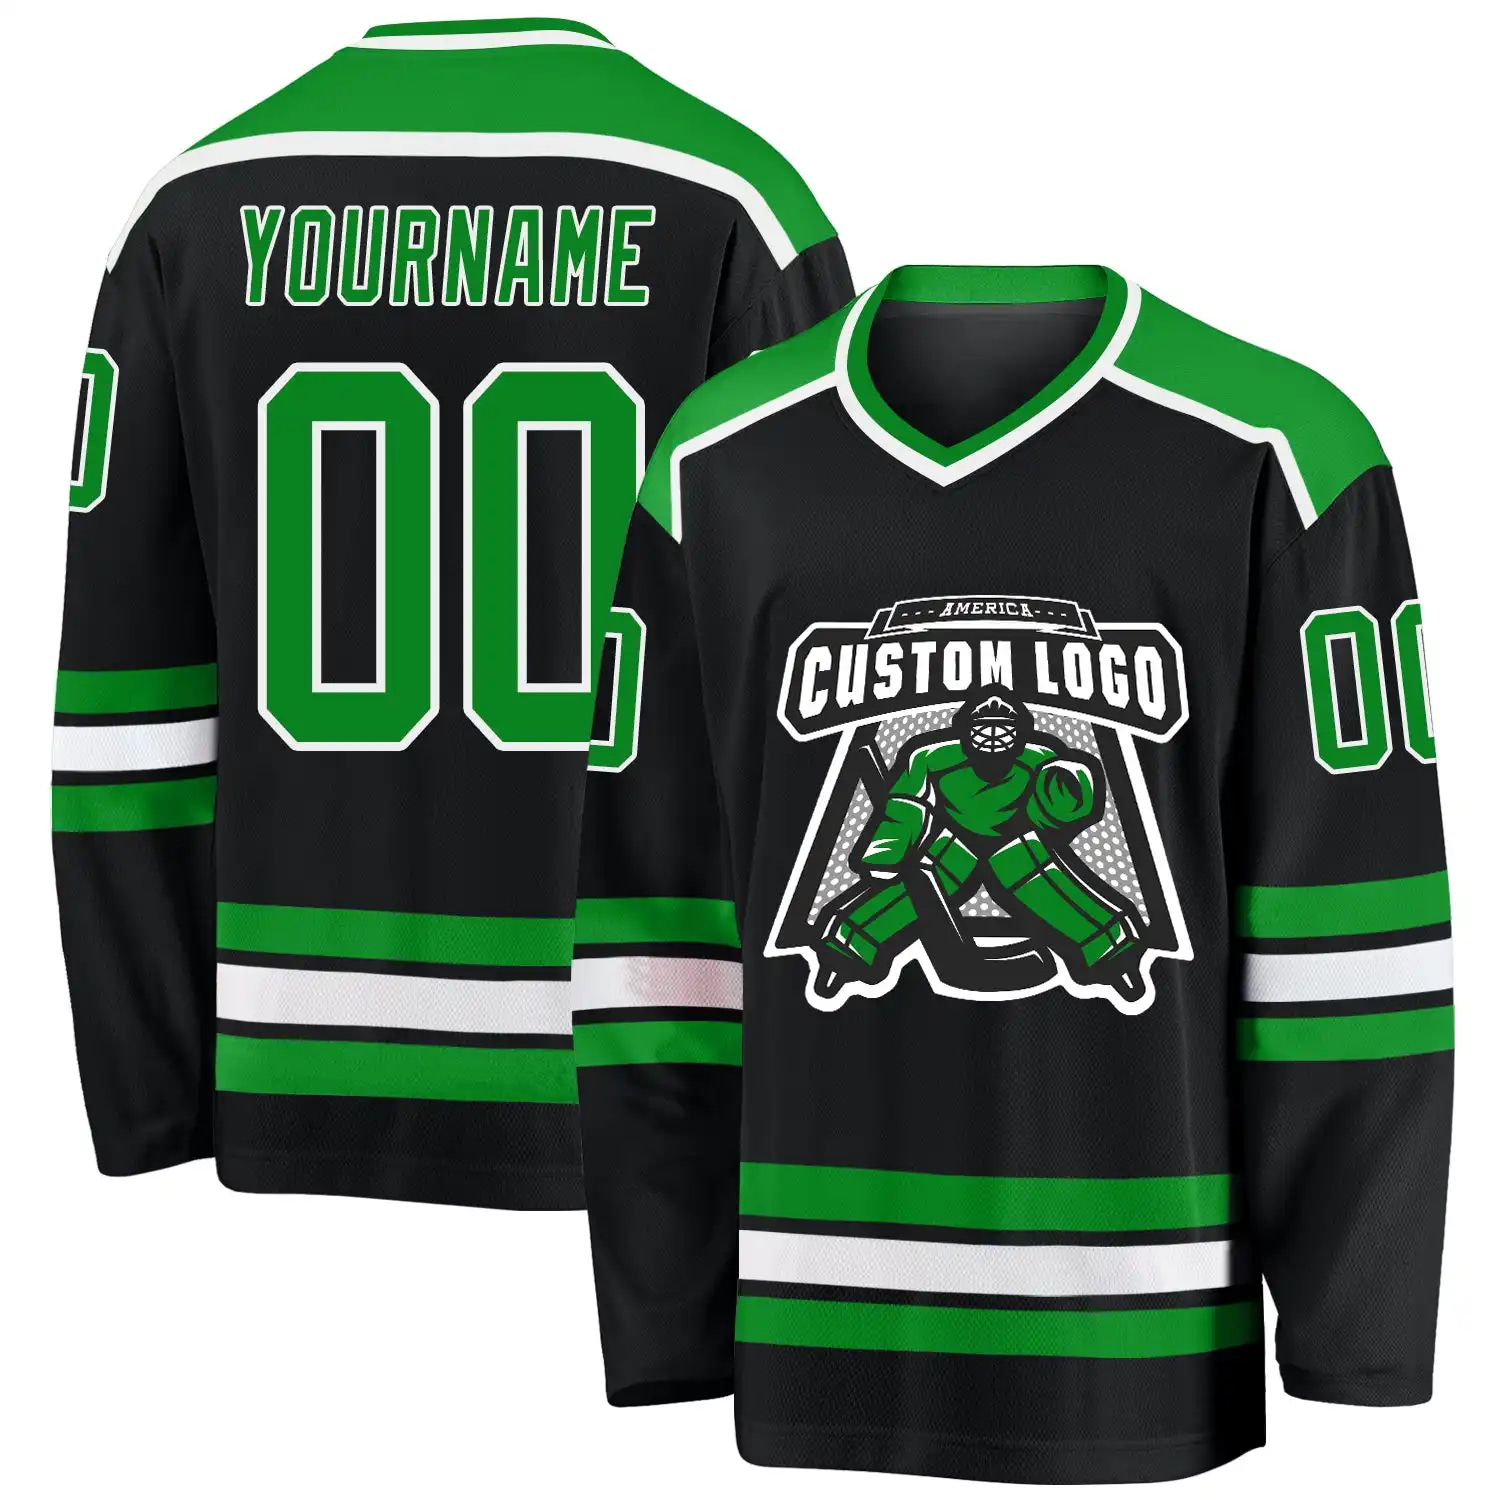 Stitched And Print Black Grass Green-white Hockey Jersey Custom